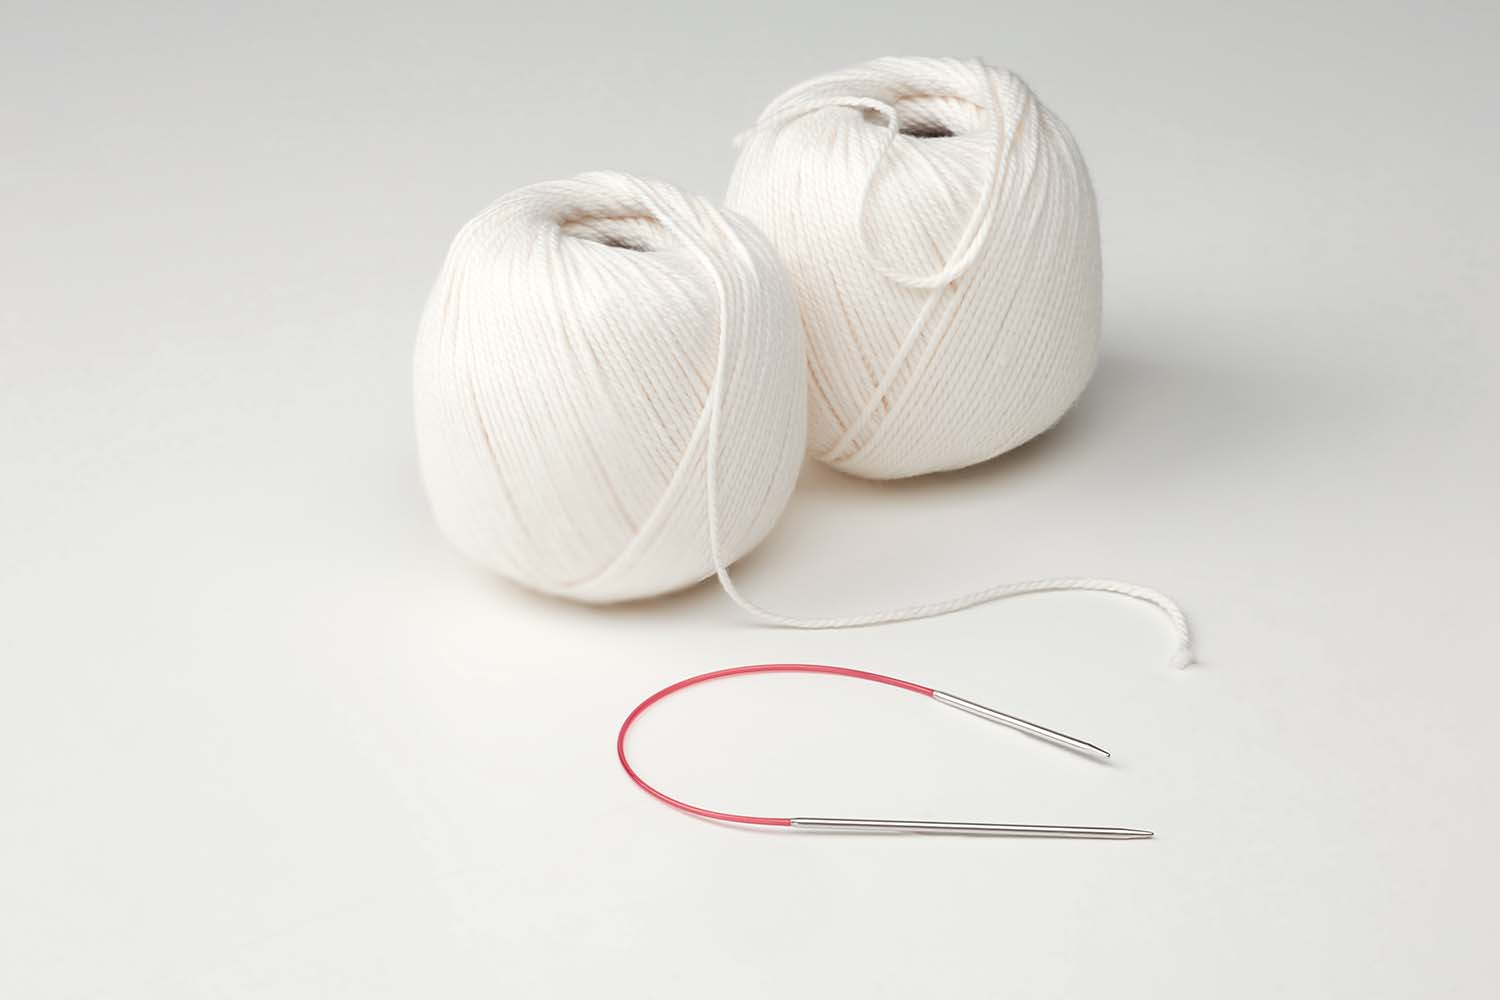 710 7 addiSockwonder addiSockwonder circular knitting needle cicular knitting needle small diameter LACE metal 2 5mm 25cm US 0 8 100 madeinGermany mood rgb addi circular knitting needle